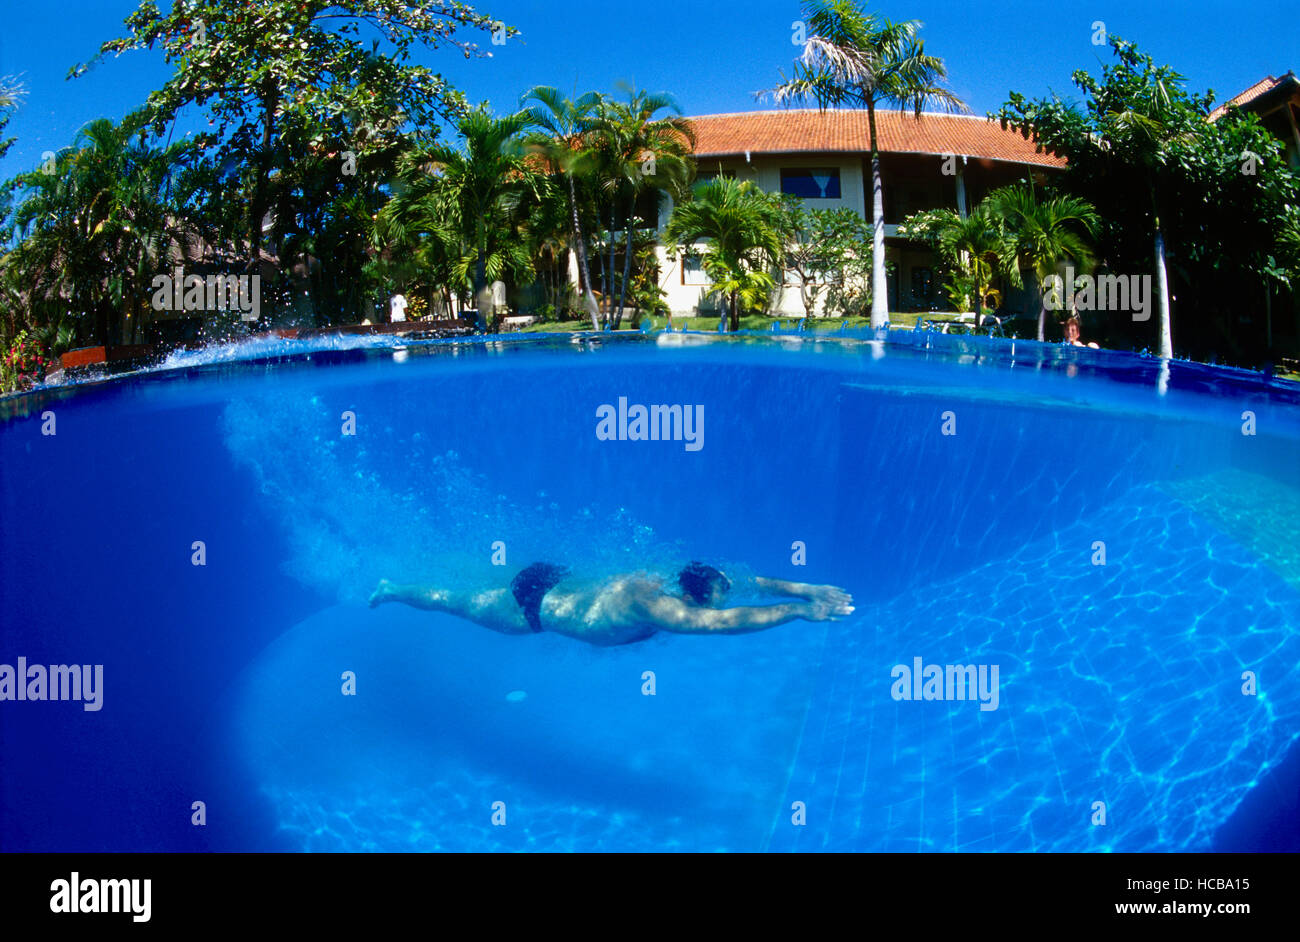 Man in a swimming pool, Tulamben, Bali, Indonesia, South East Asia Stock Photo